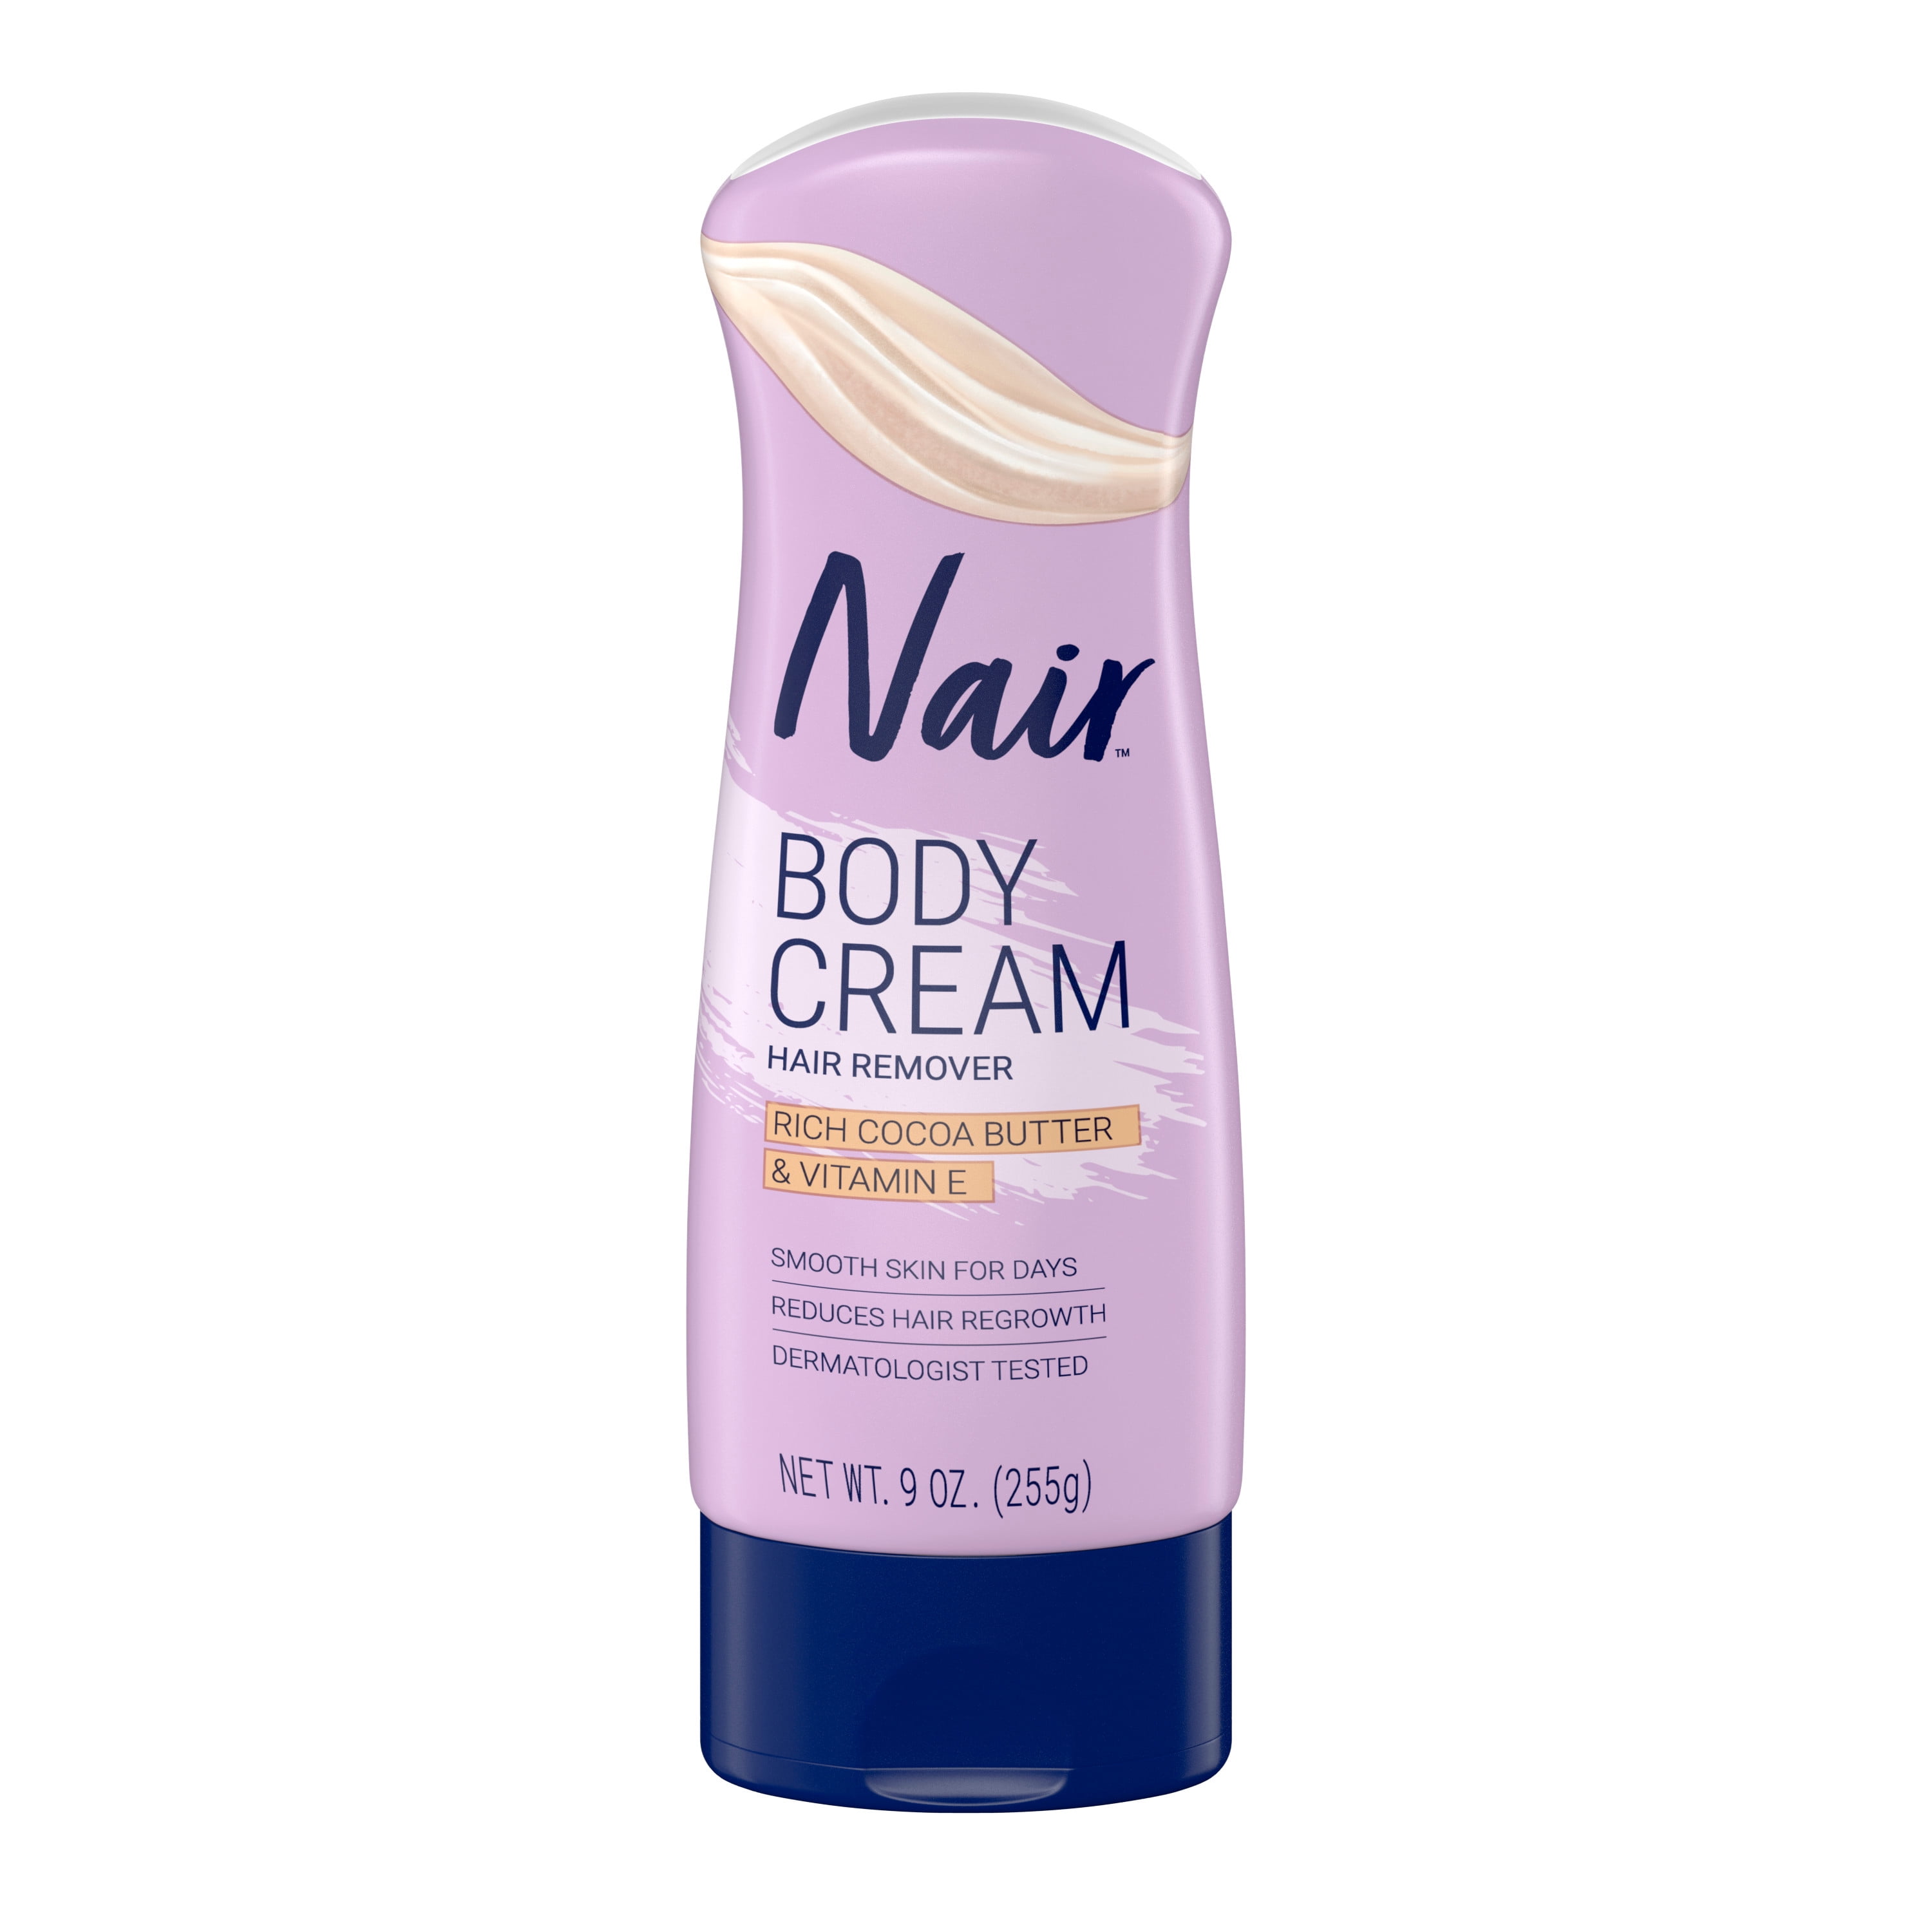 Nair Aloe & Water Lily Hair Removal Body Cream,  oz. 